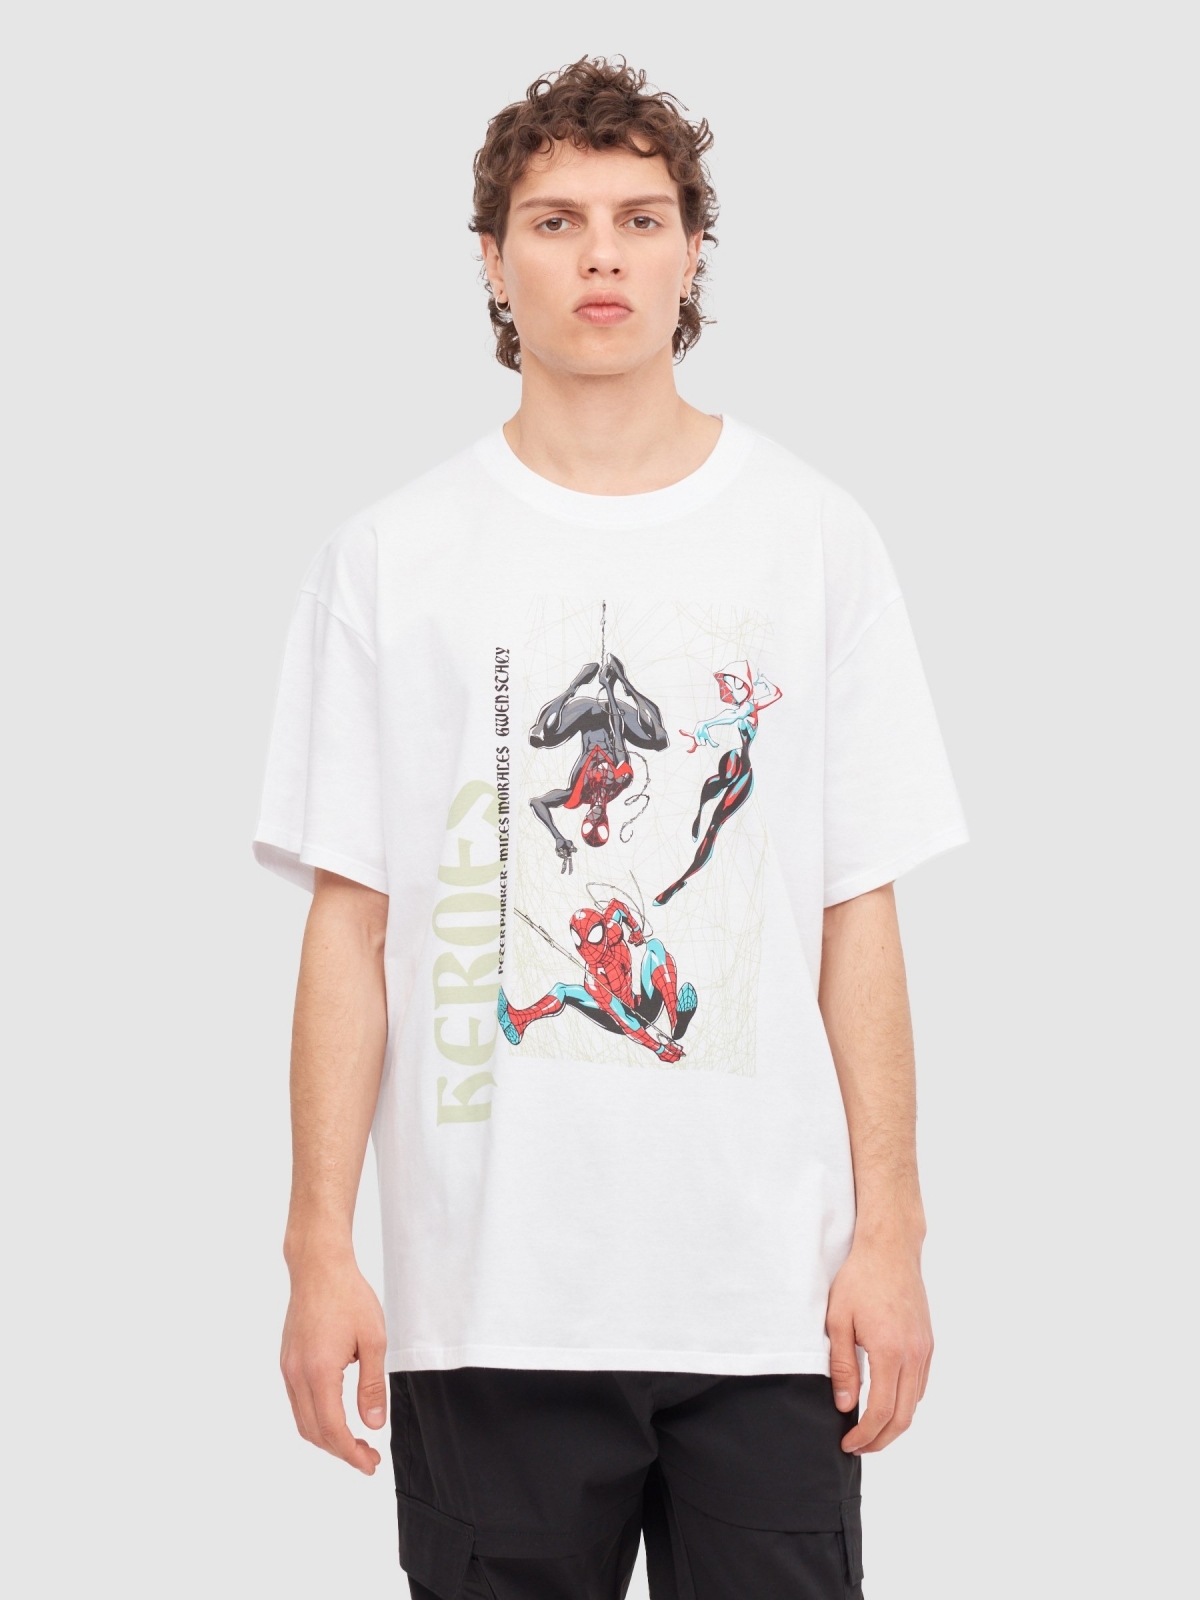 Camiseta Spiderman Heroes blanco vista media frontal